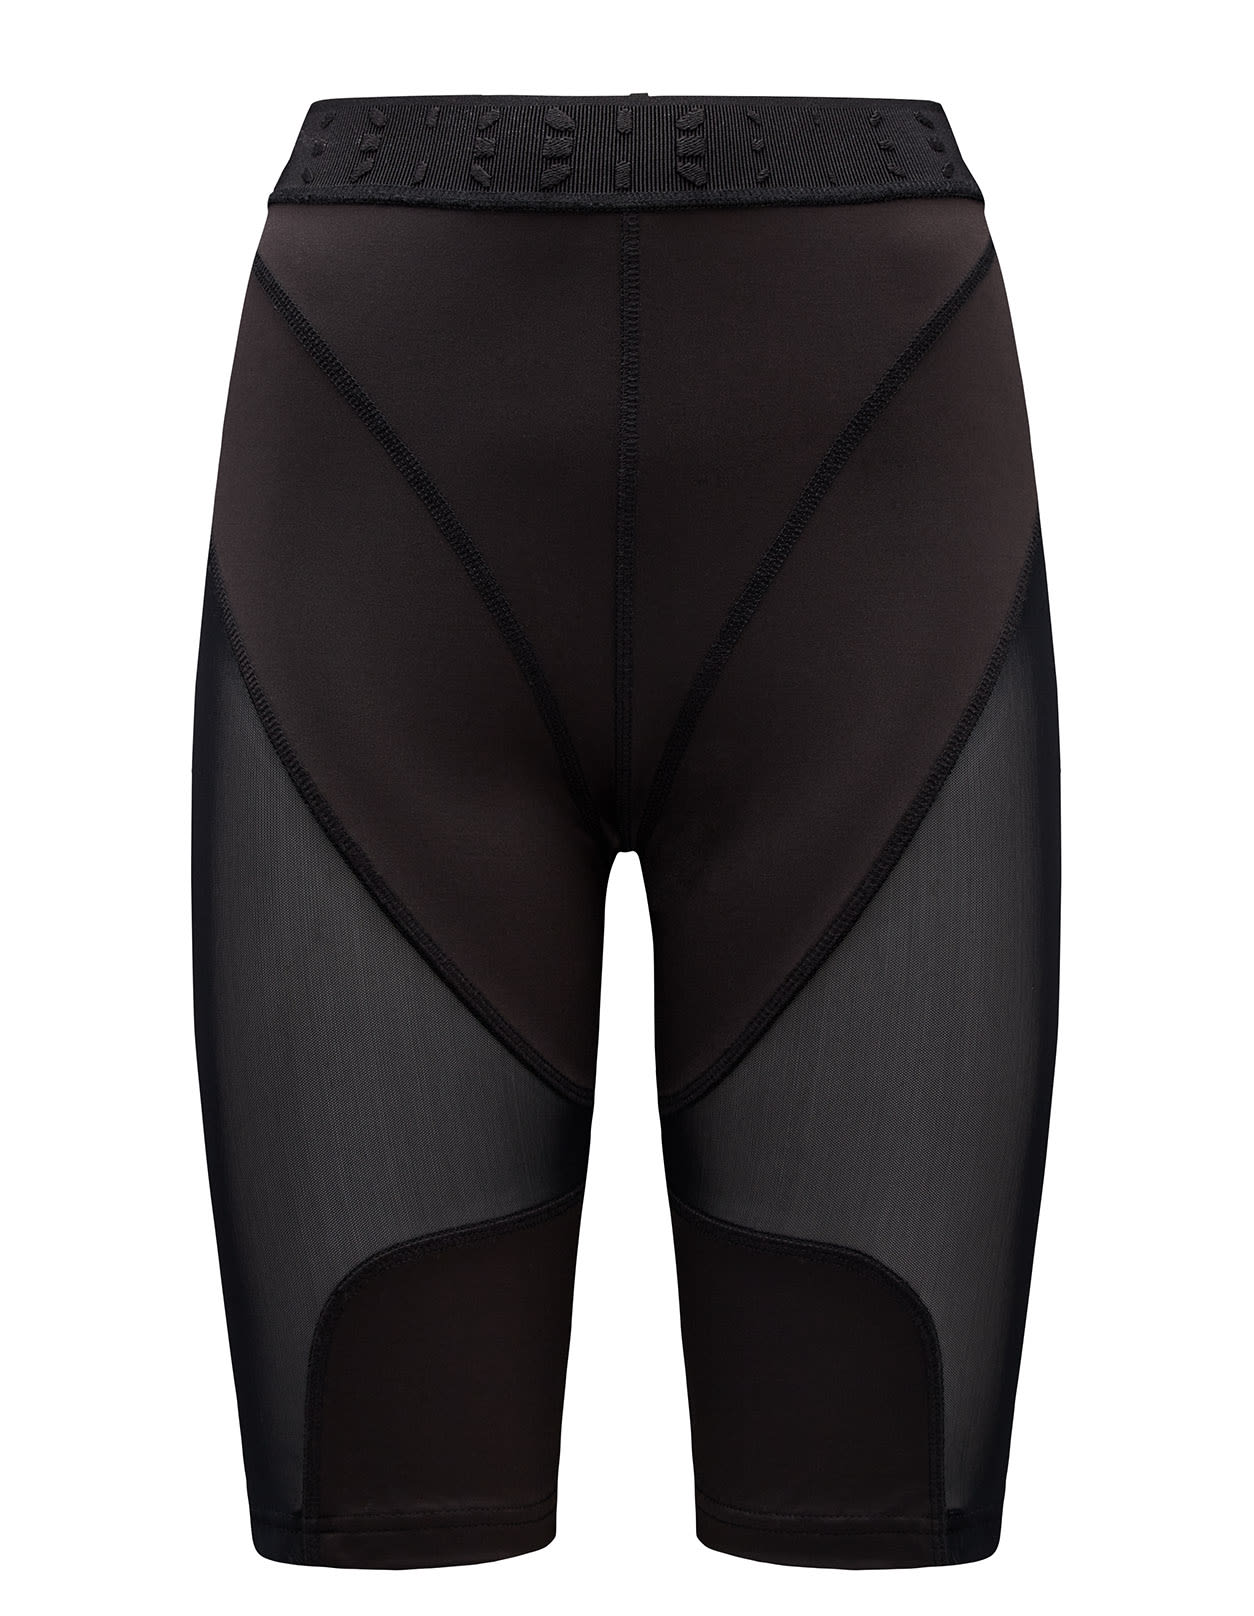 McQ Alexander McQueen Woman Black S10 Anatomic Shorts